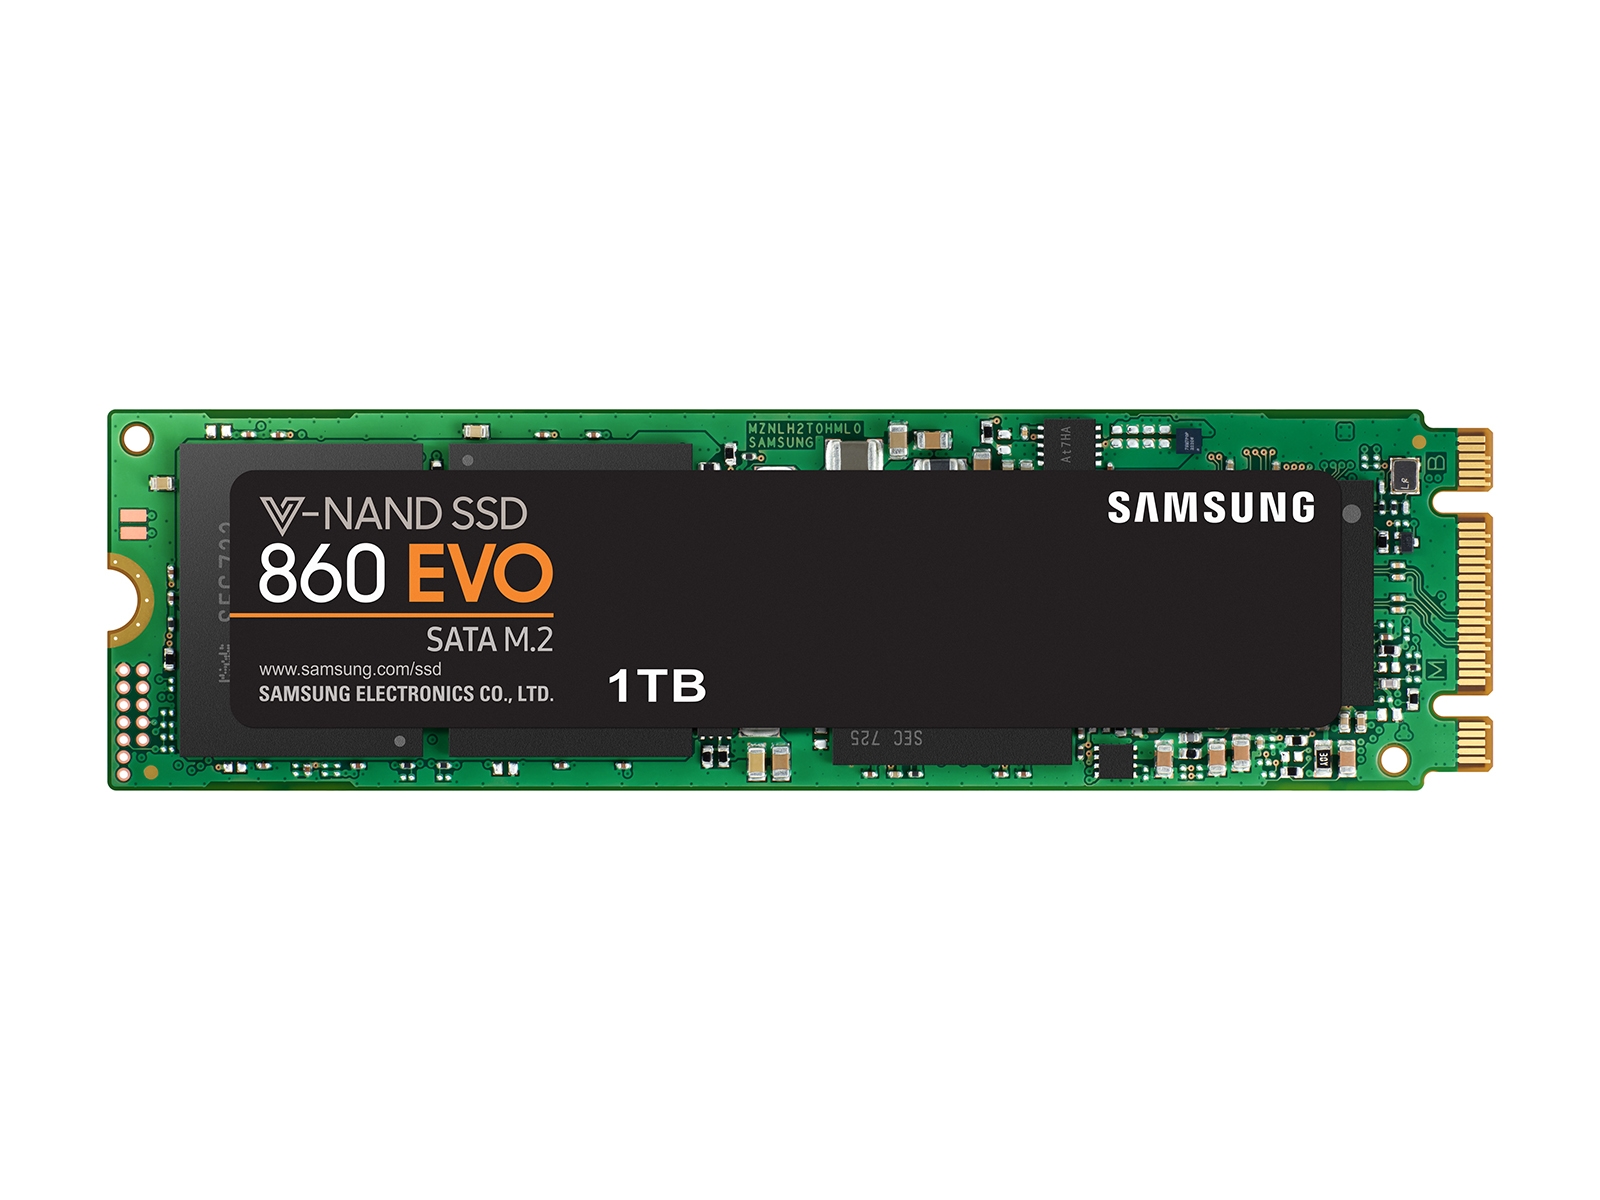 SSD 860 EVO M.2 1TB & Storage - MZ-N6E1T0BW | Samsung